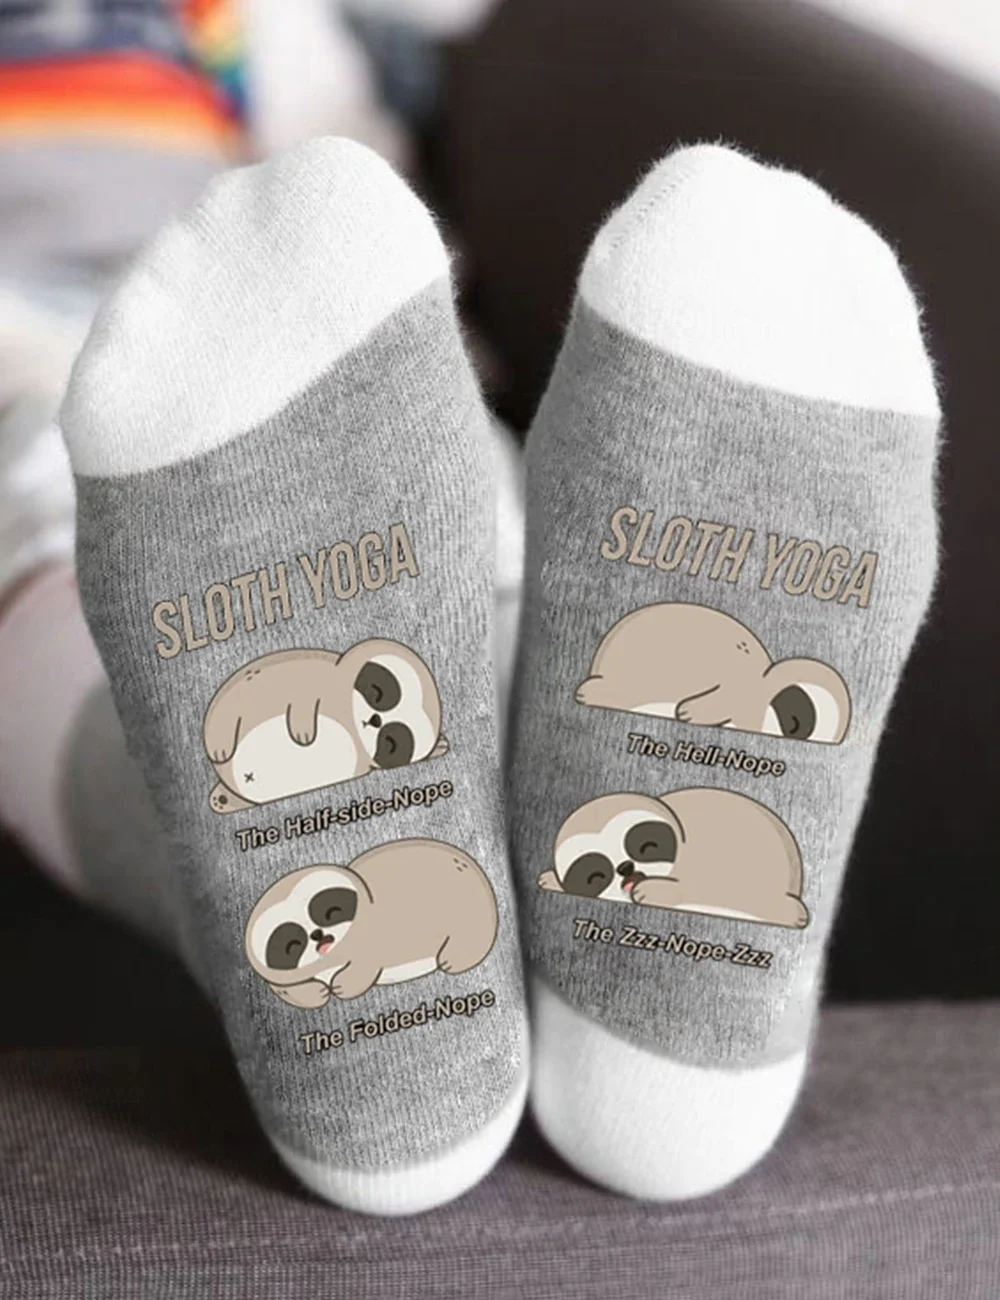 Sloth Yoga Socks